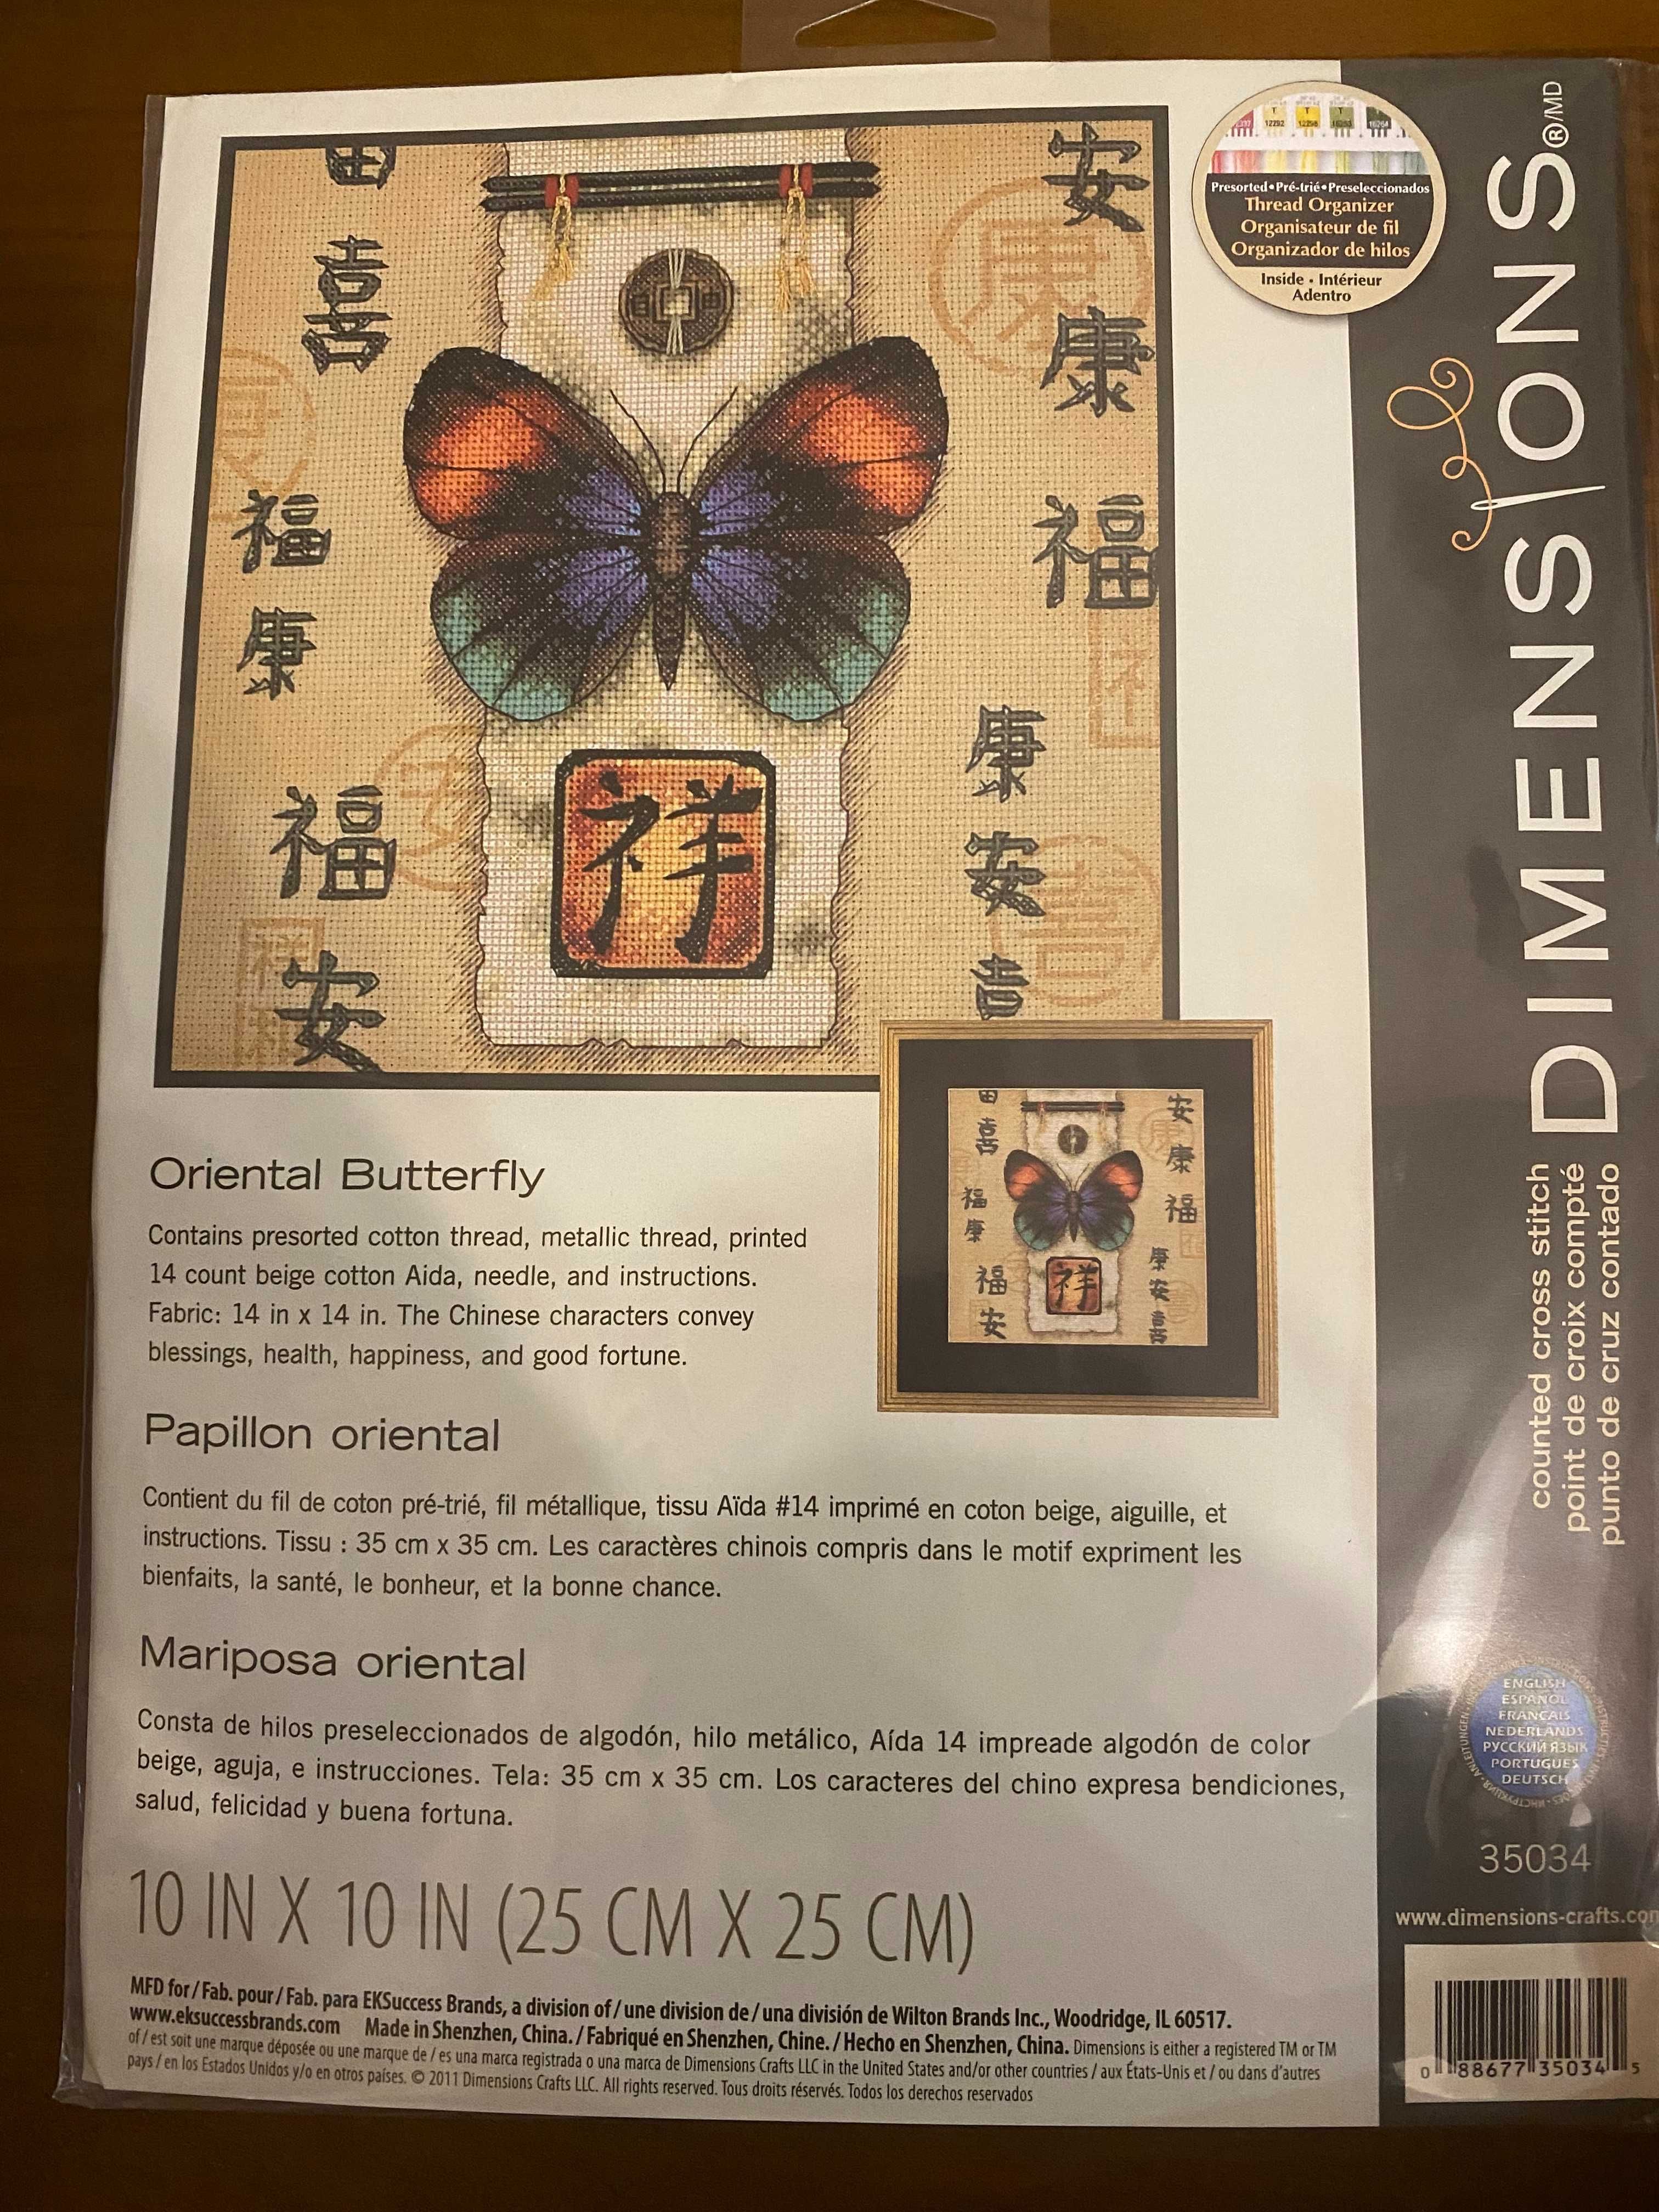 Dimensions 'Oriental Butterfly' 35034